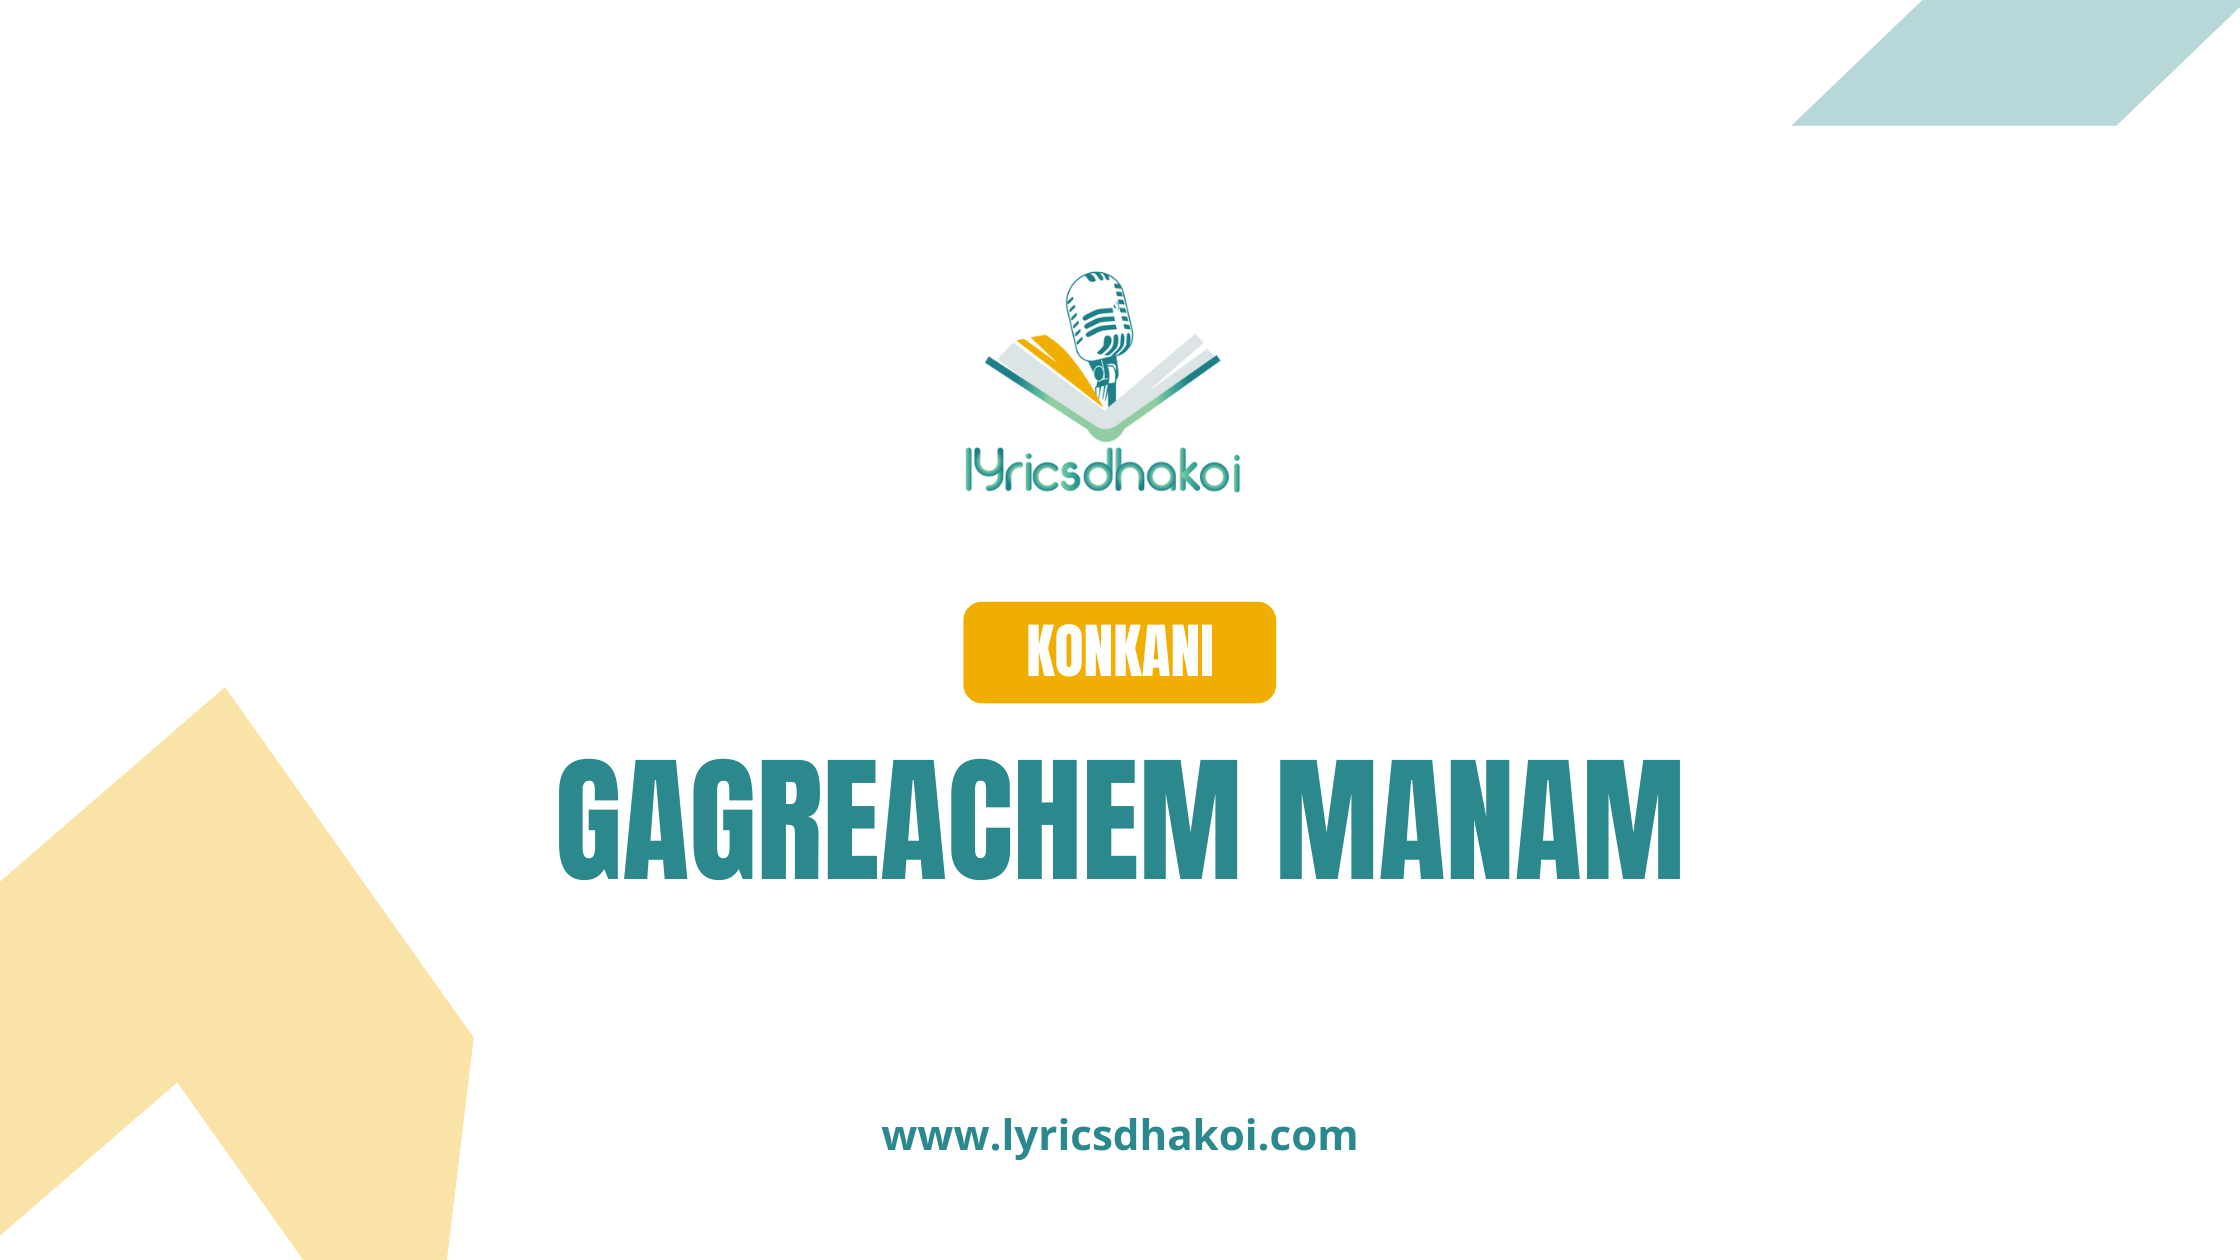 Gagreachem Manam Konkani Lyrics for Karaoke Online - LyricsDhakoi.com